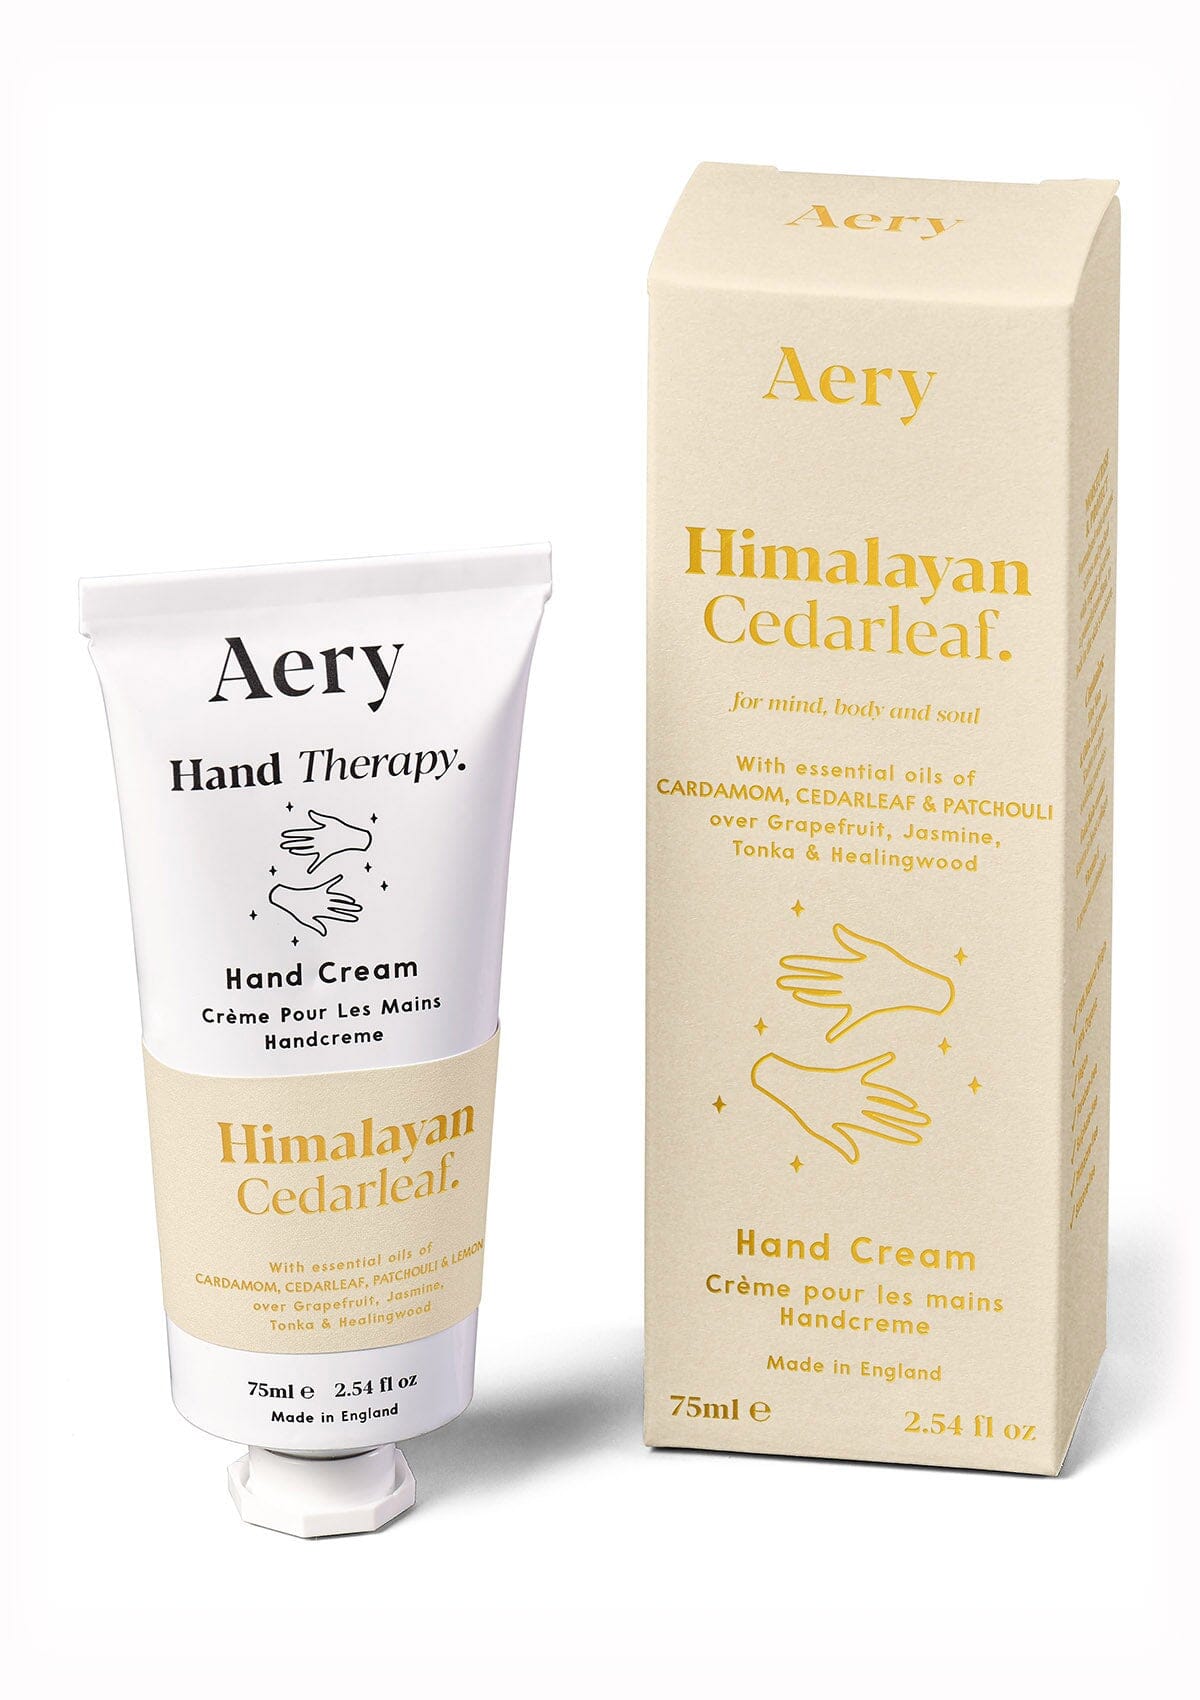 Cream Himalayan Cedarleaf hand cream by Aery on white background 